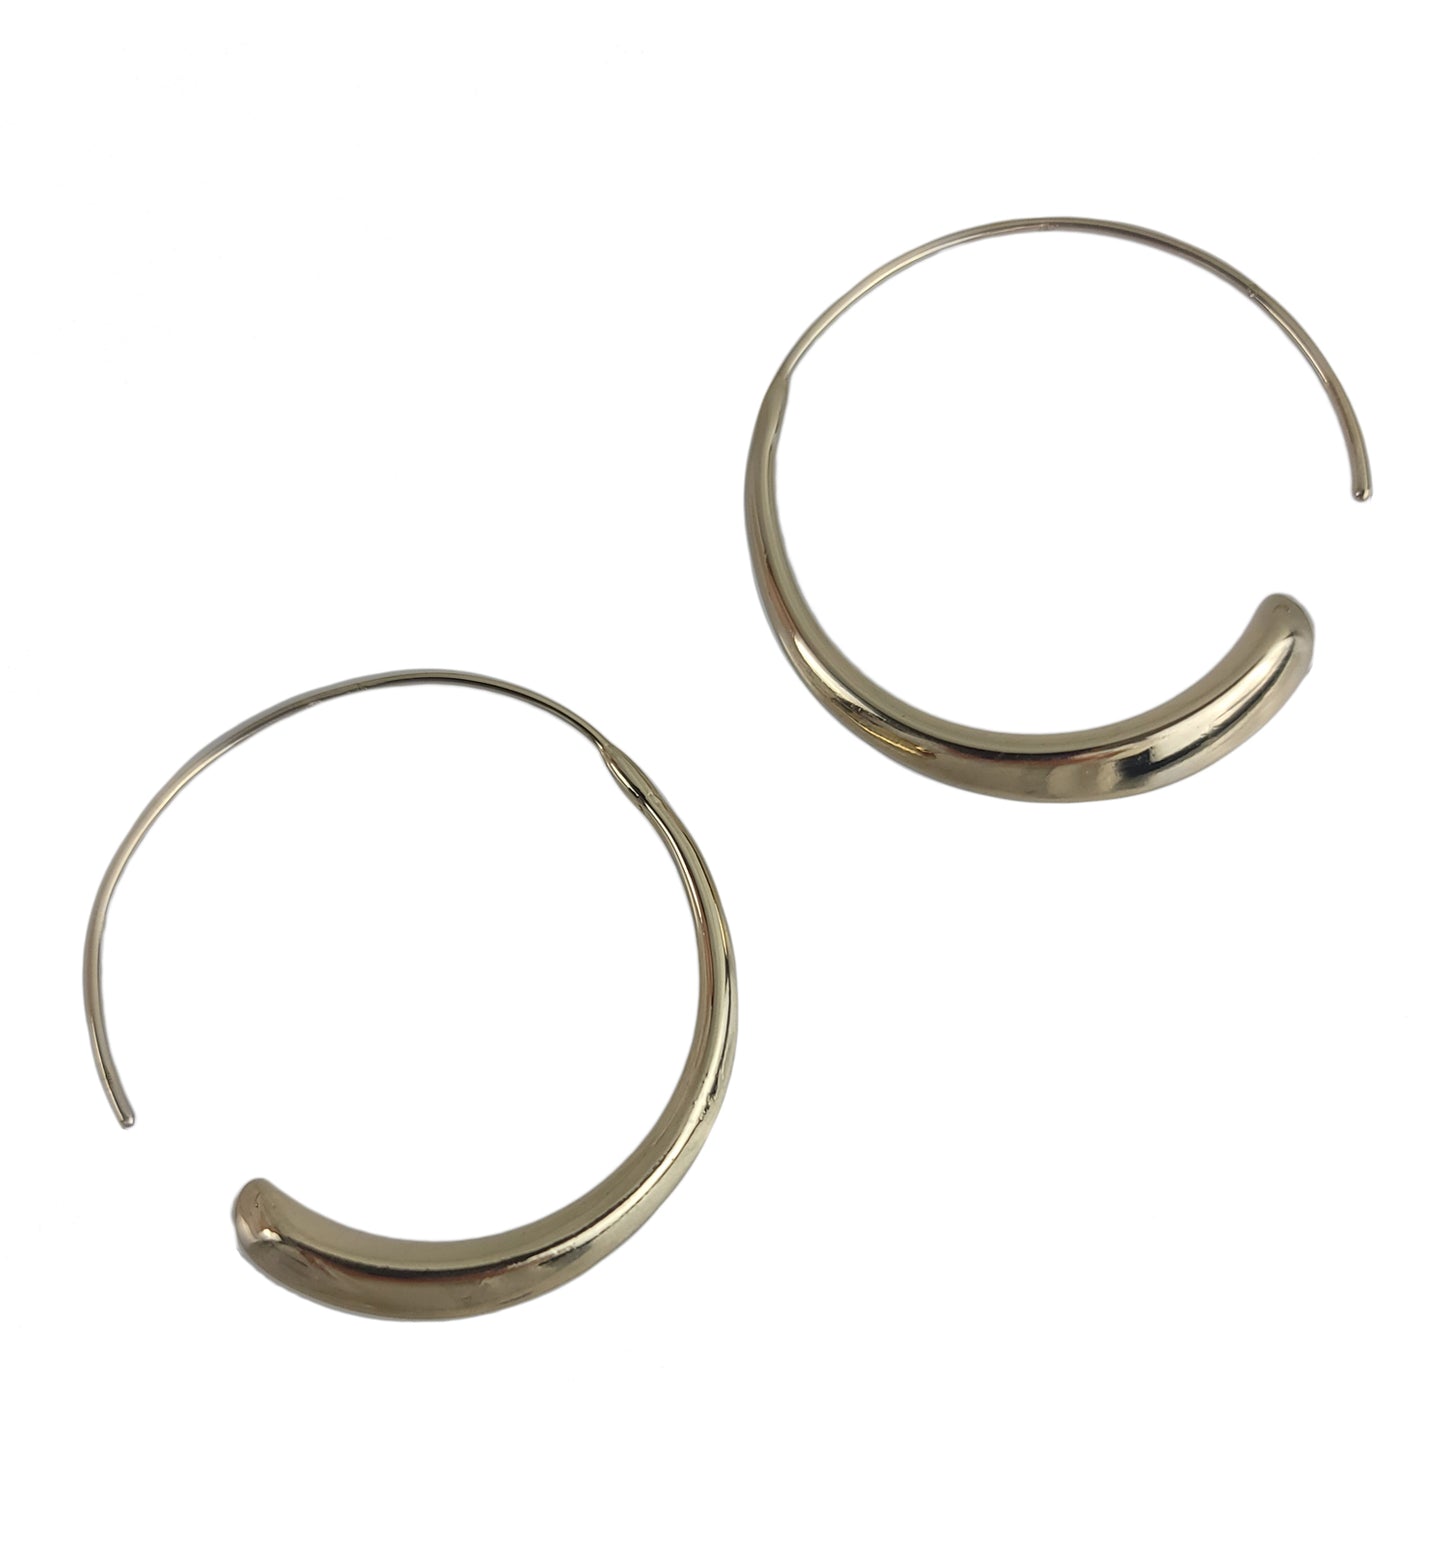 Express Threader Hoop Gold Tone Pierced Earrings  1 1/4" NWT